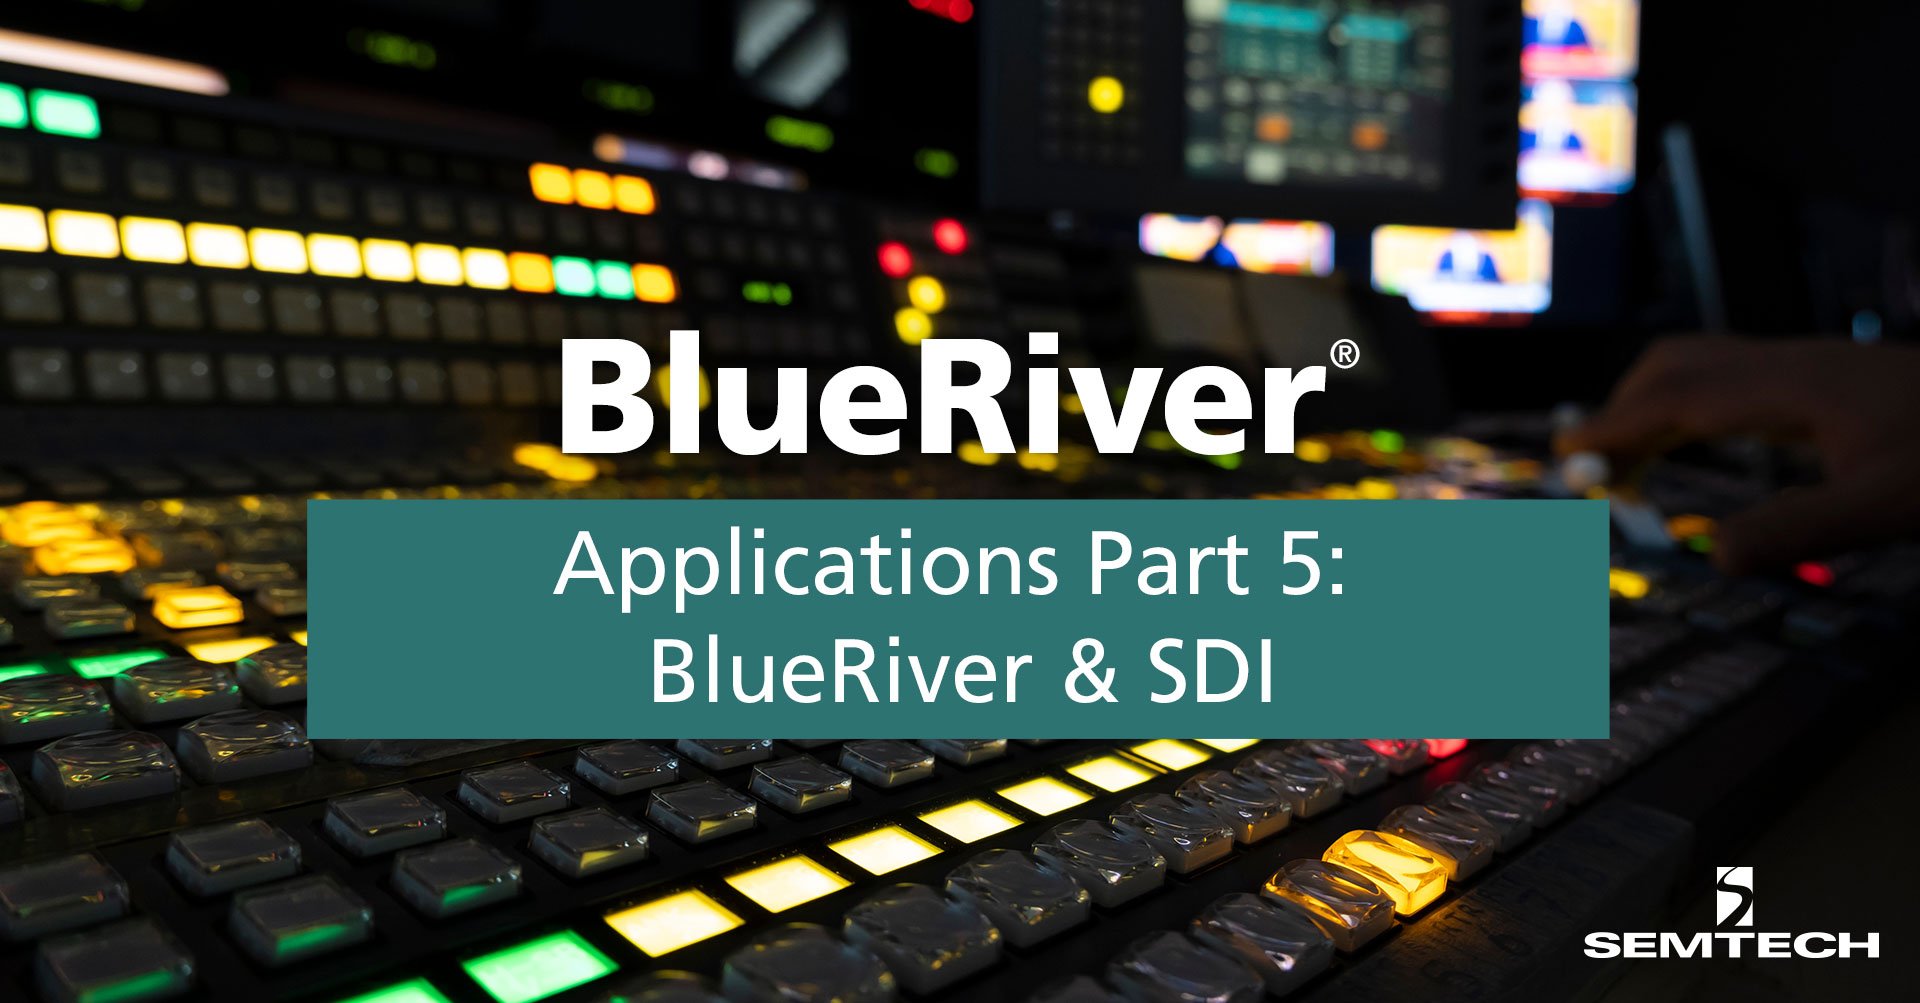 BlueRiver Applications Part 5: BlueRiver & SDI